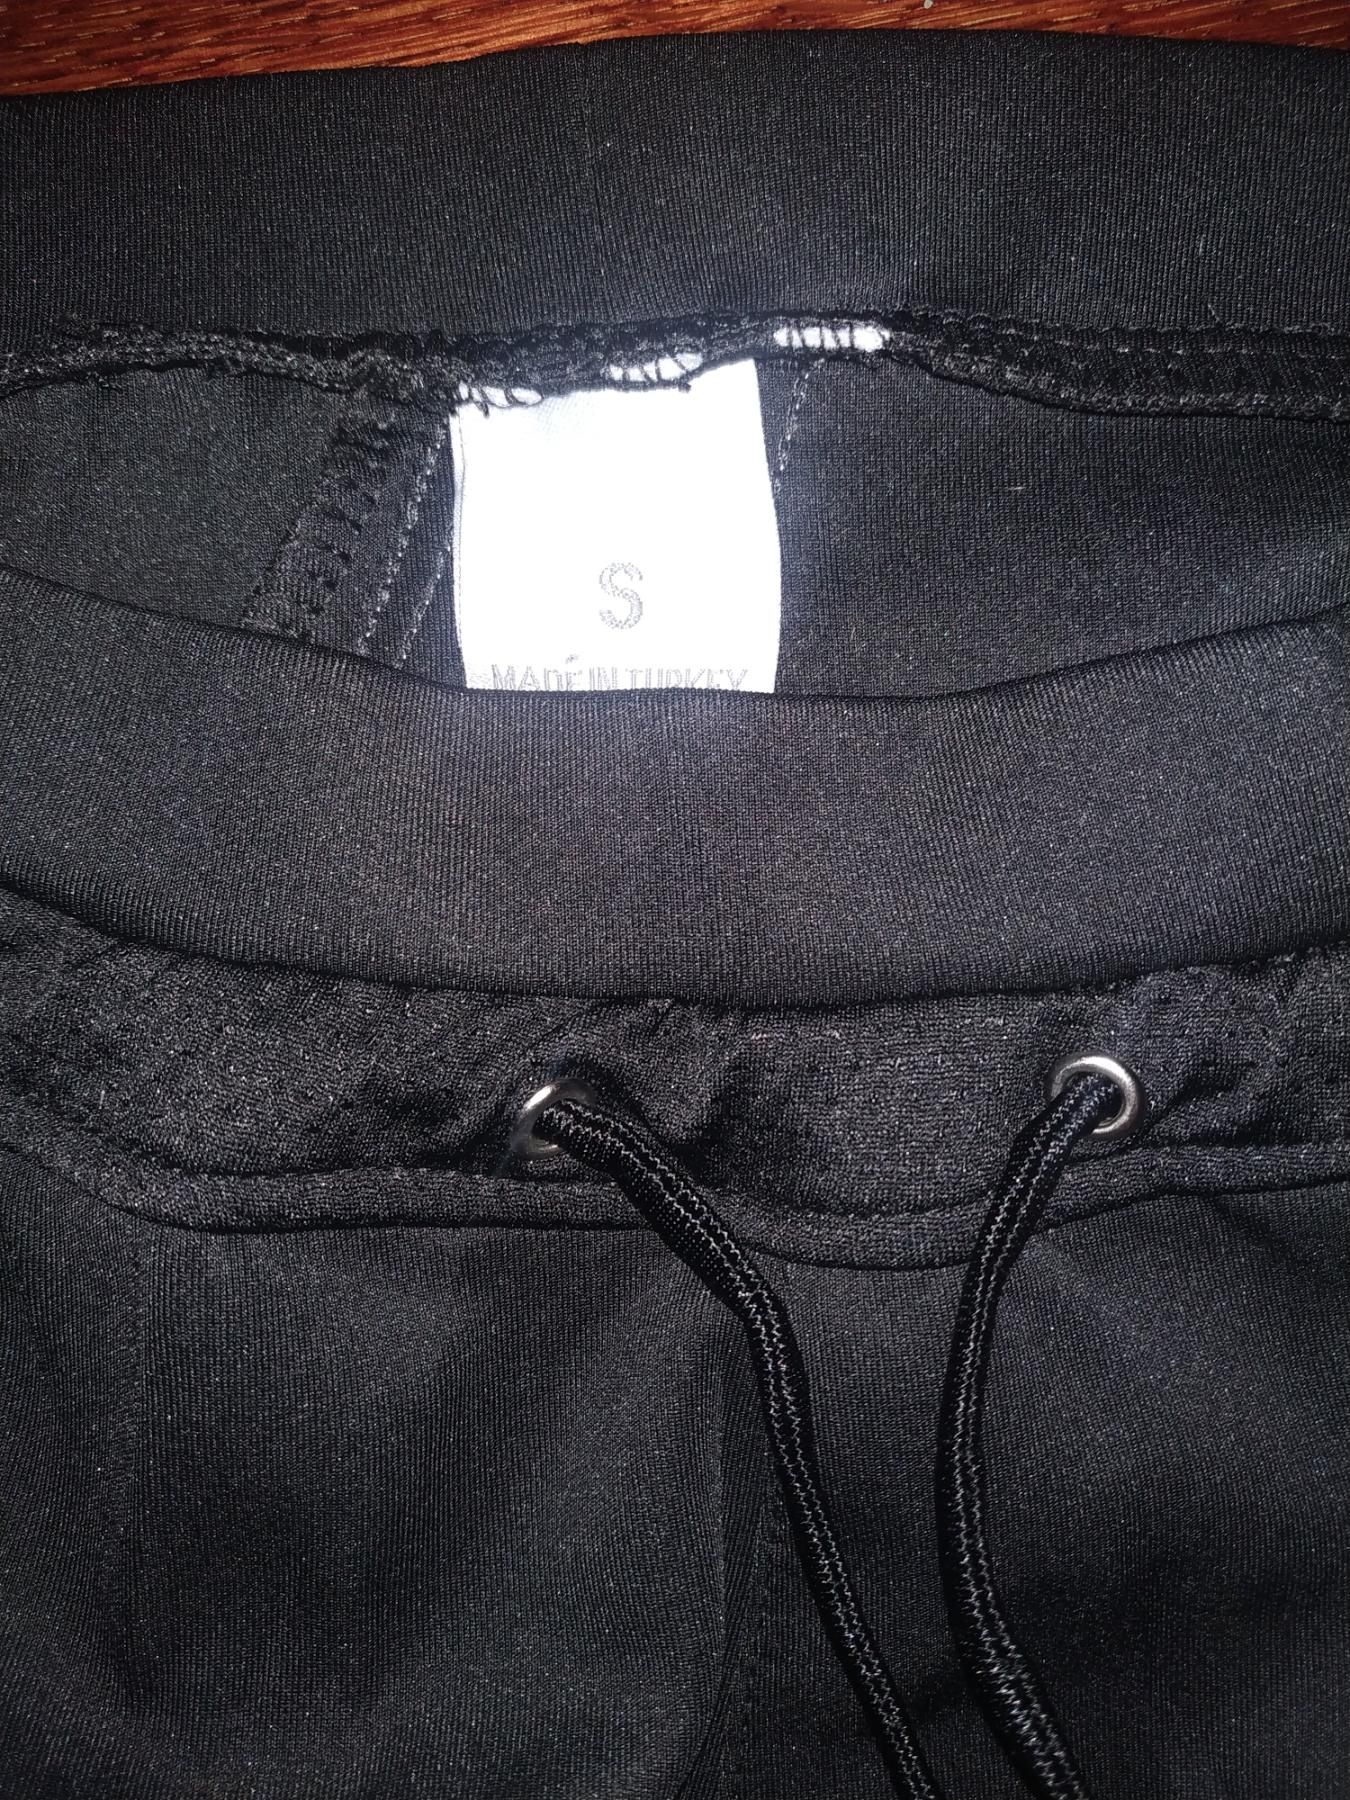 Продам штаны женские Adidas оригинал 170грн